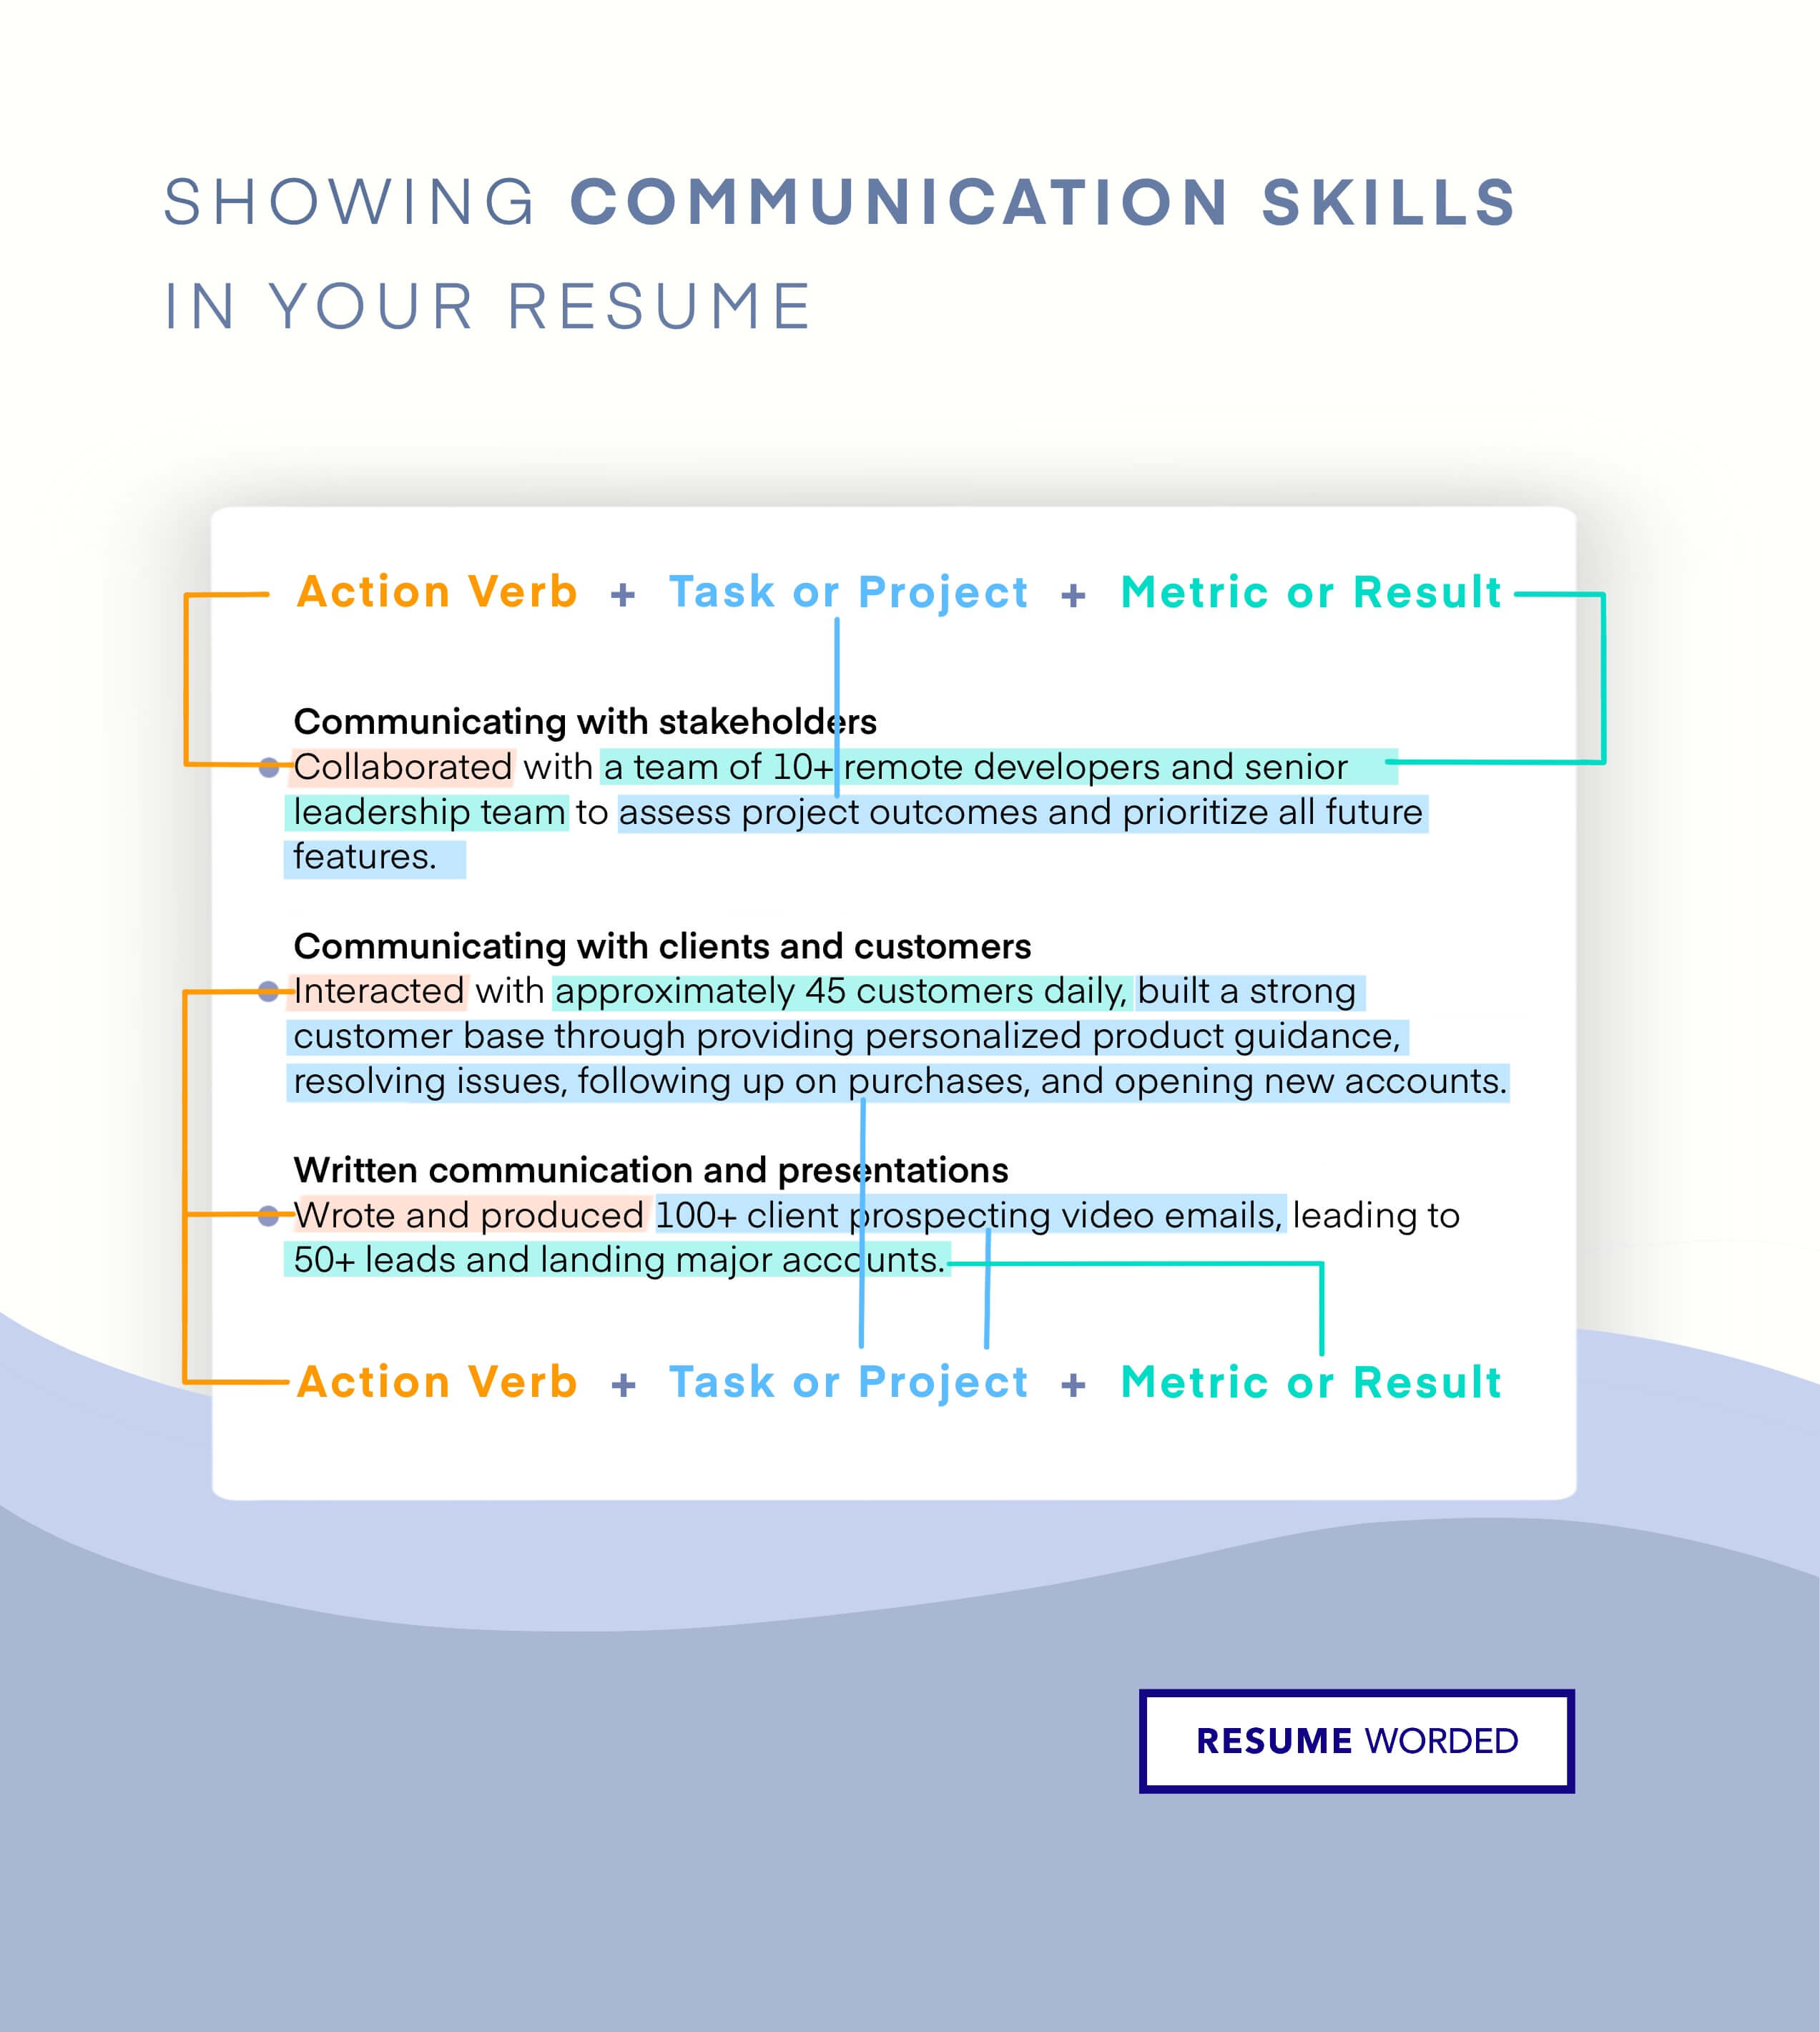 Include extra communication skills. - Principal Software Engineer Resume